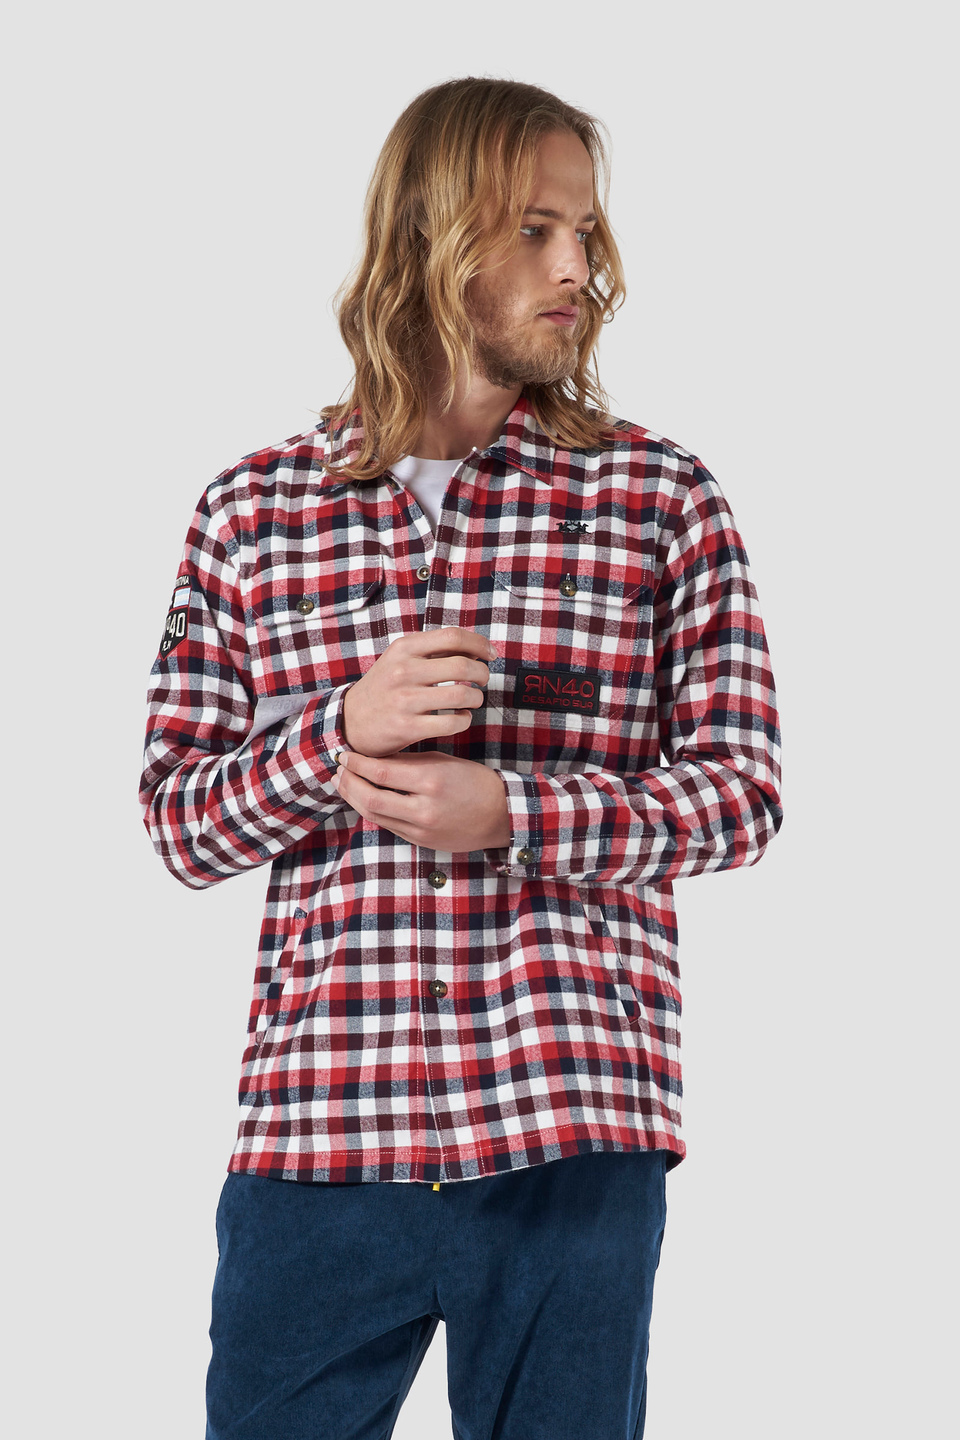 Chequered cotton shirt | La Martina - Official Online Shop